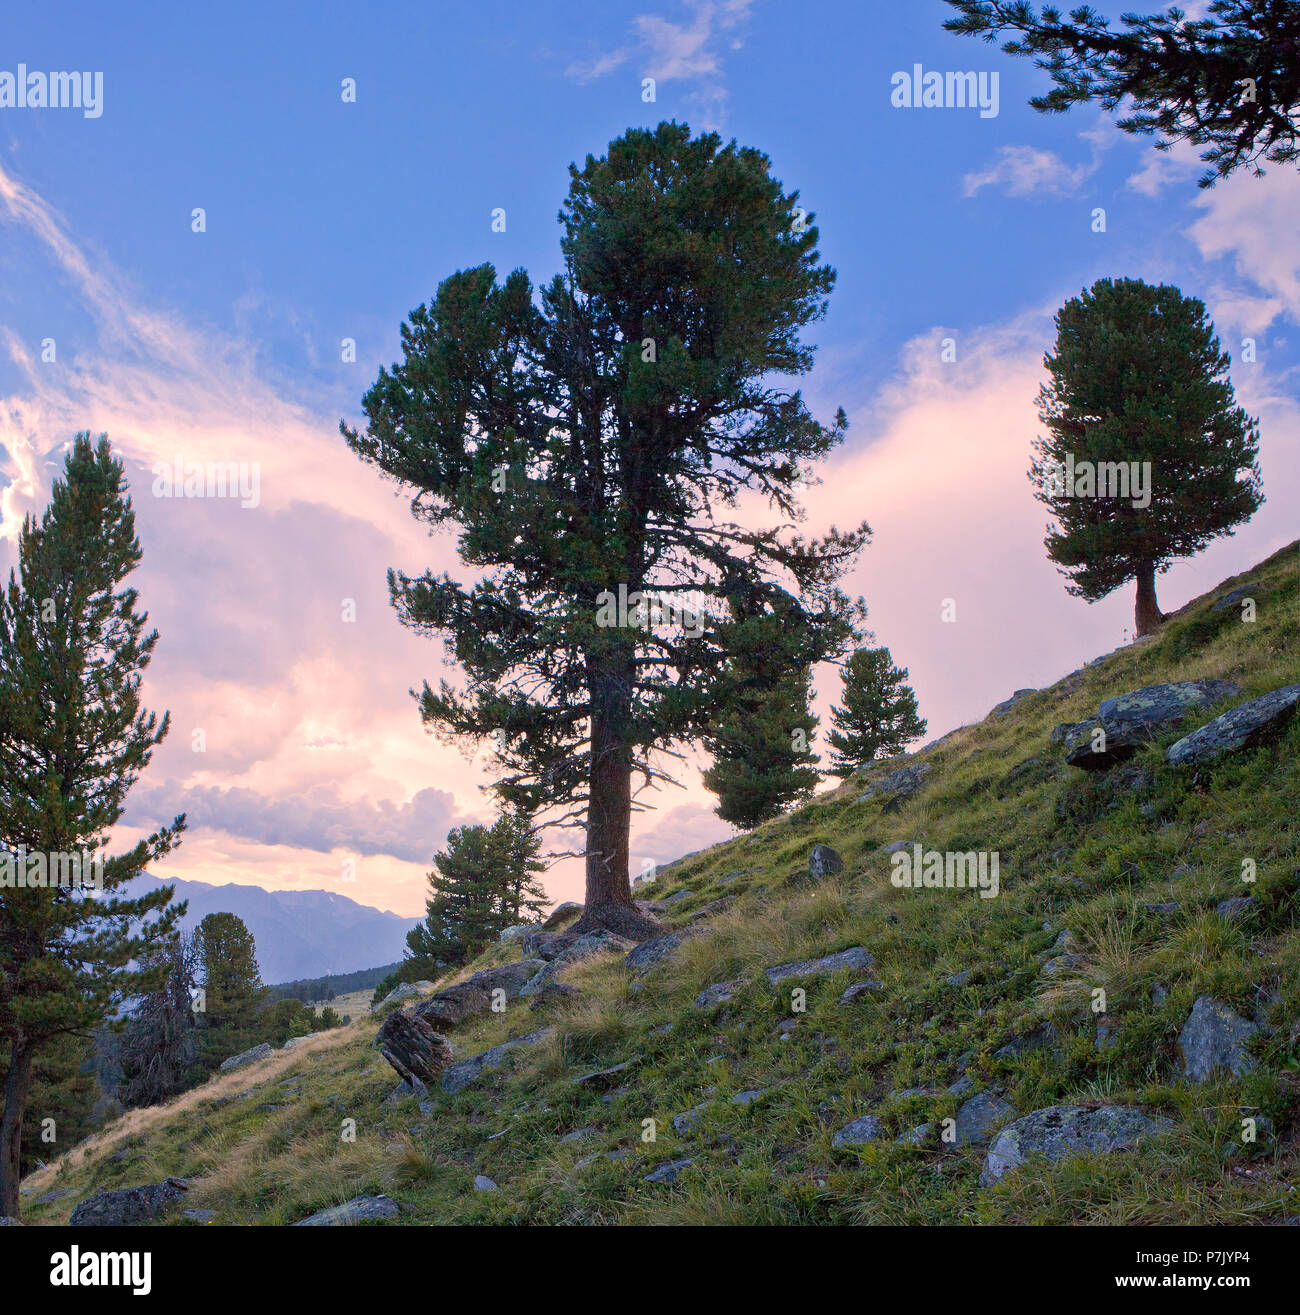 Swiss stone pines at the tree line, Pinus cembra, Tyrol, Austria, Alps Stock Photo